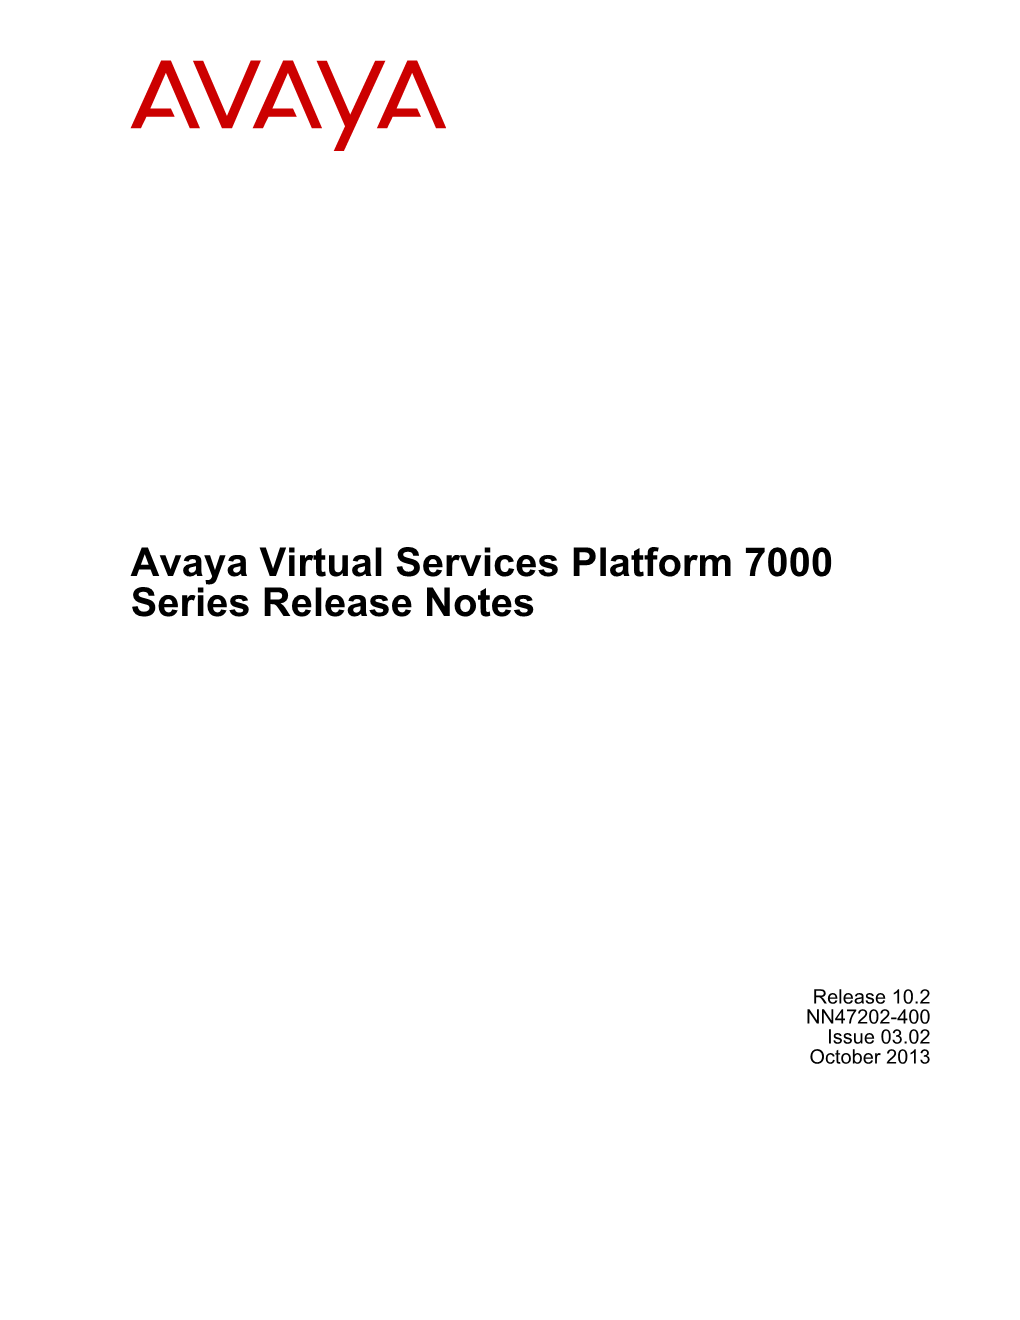 Avaya Virtual Services Platform 7000 Series Release Notes